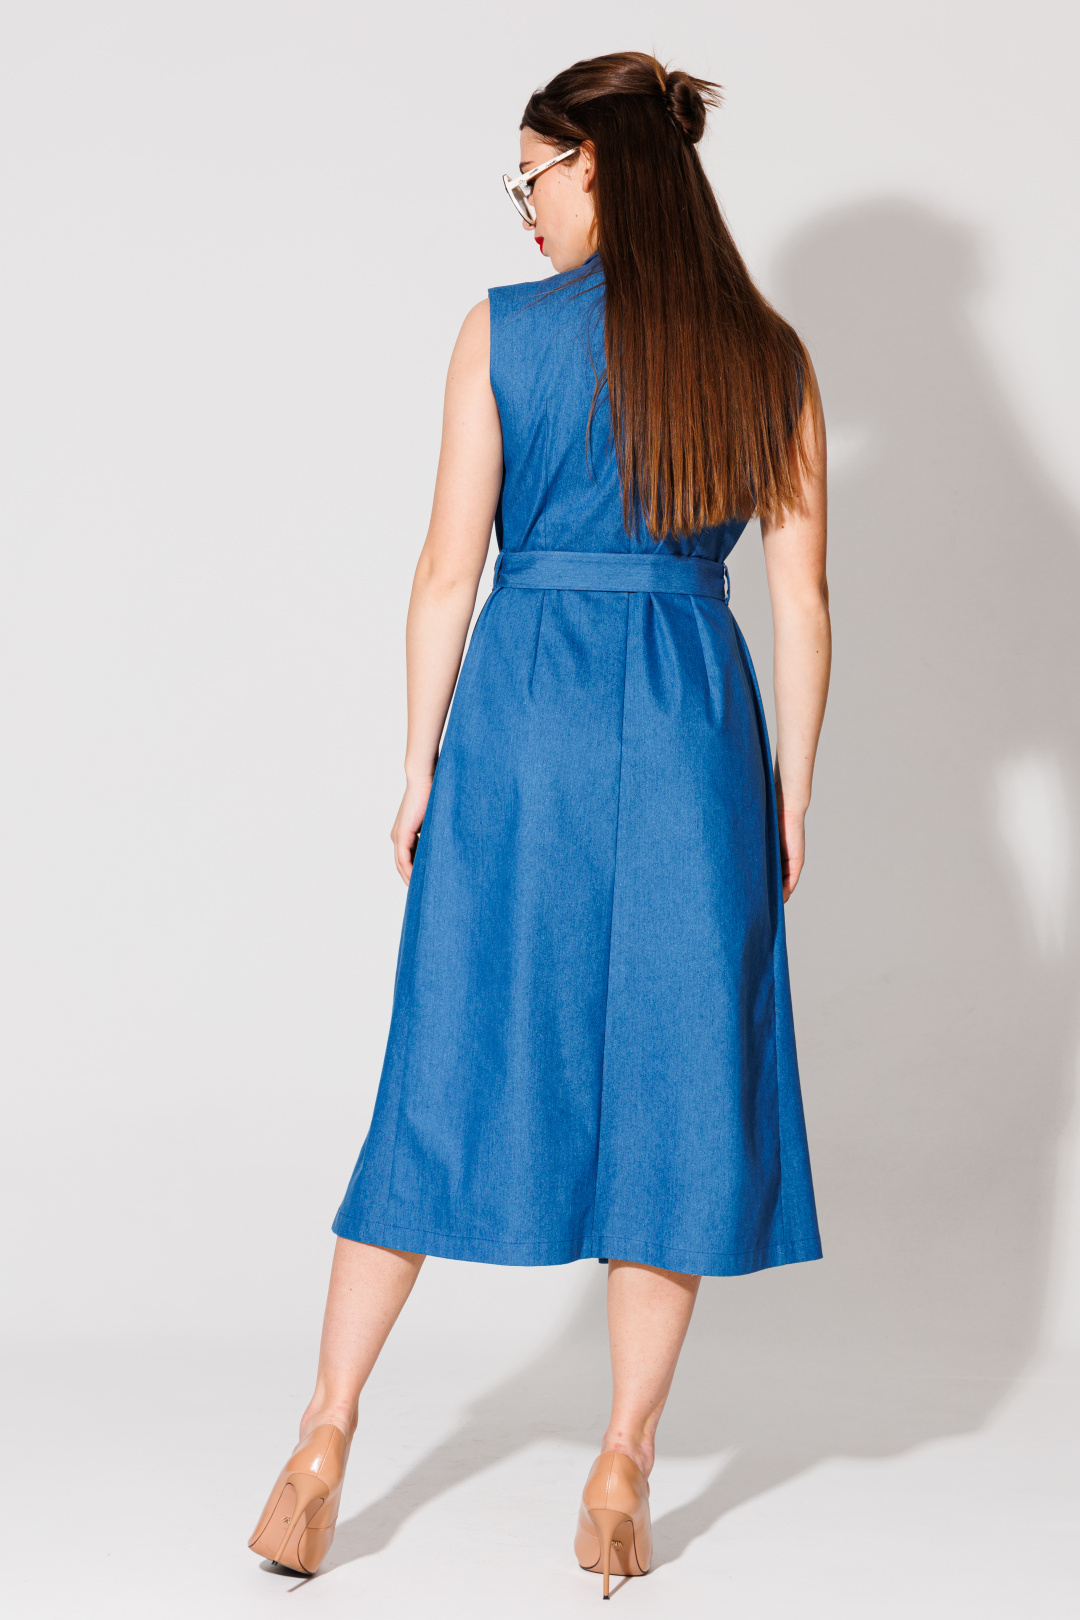 Платье NikVa н490.4 синий